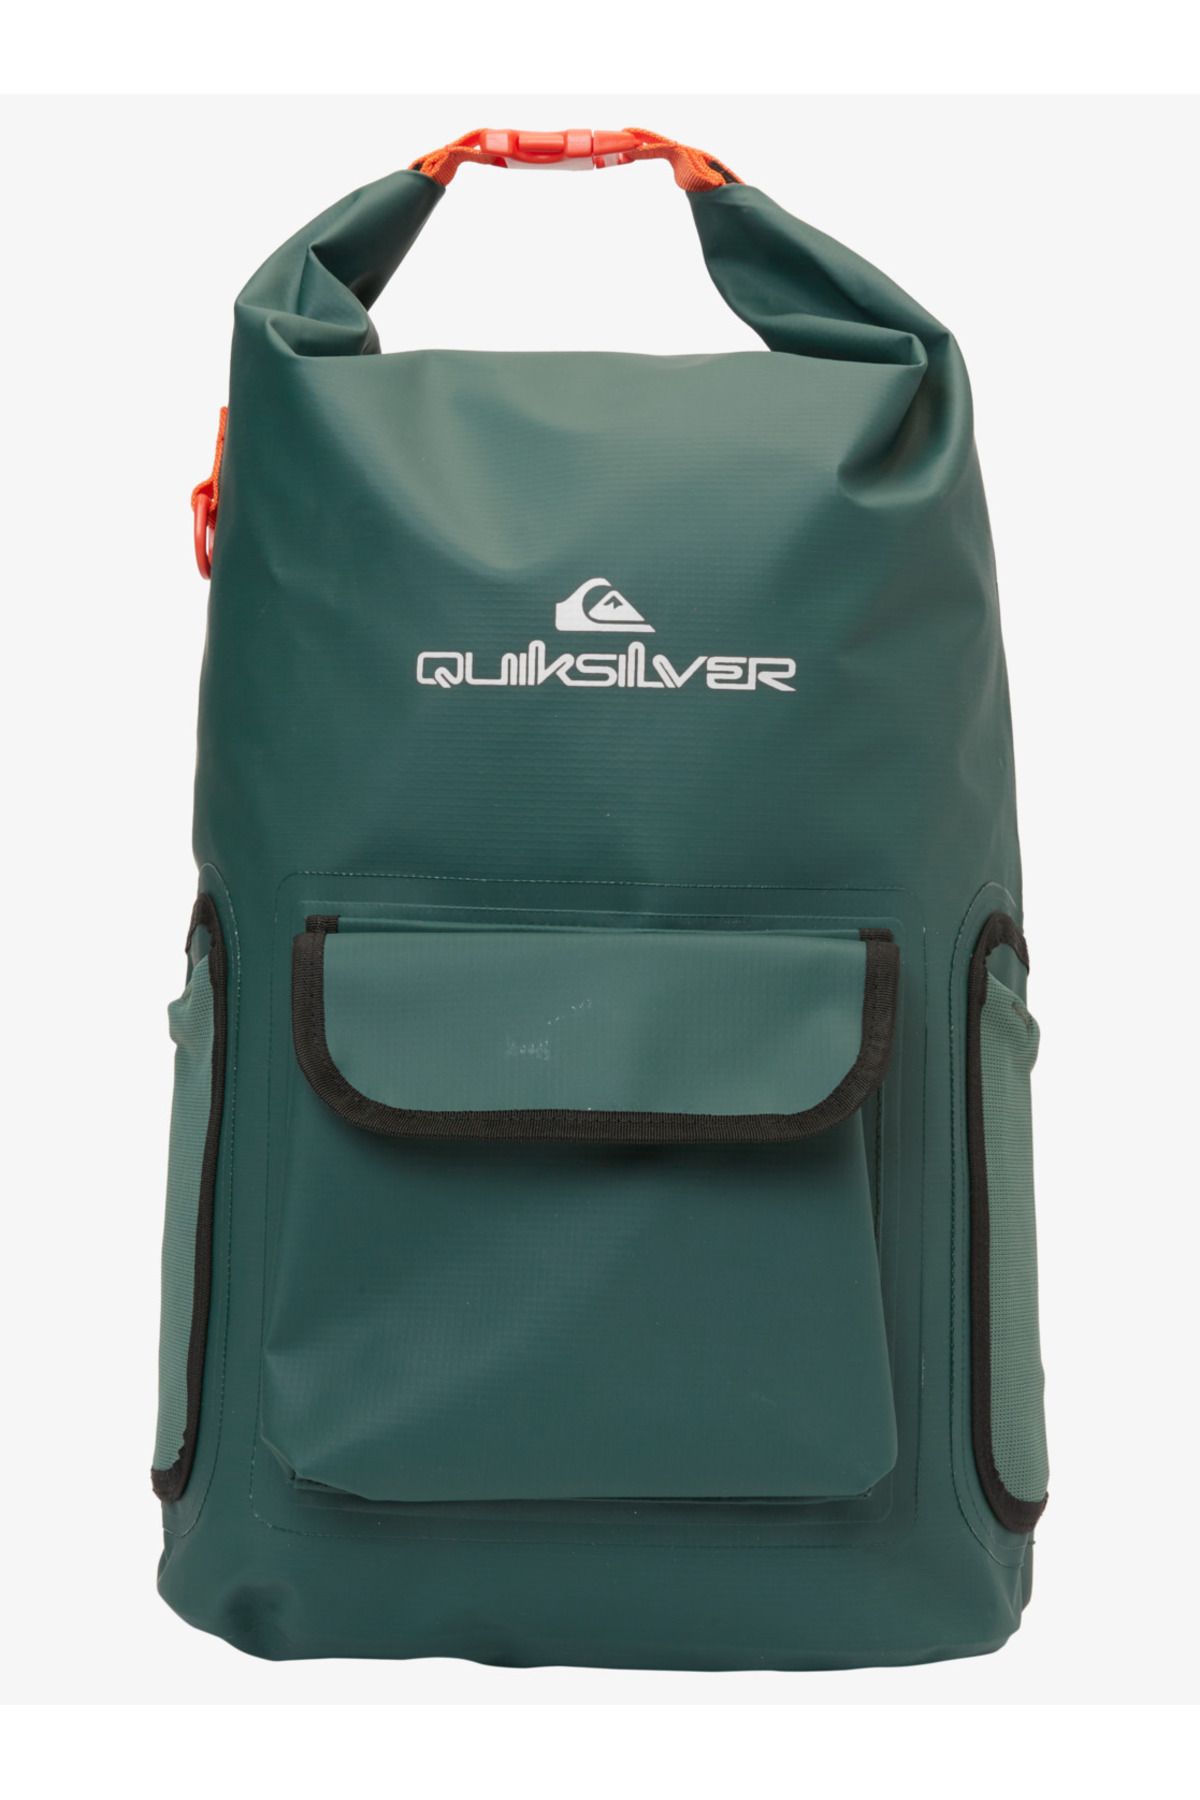 Quiksilver Sea Stash 20L - Medium sırt çantası